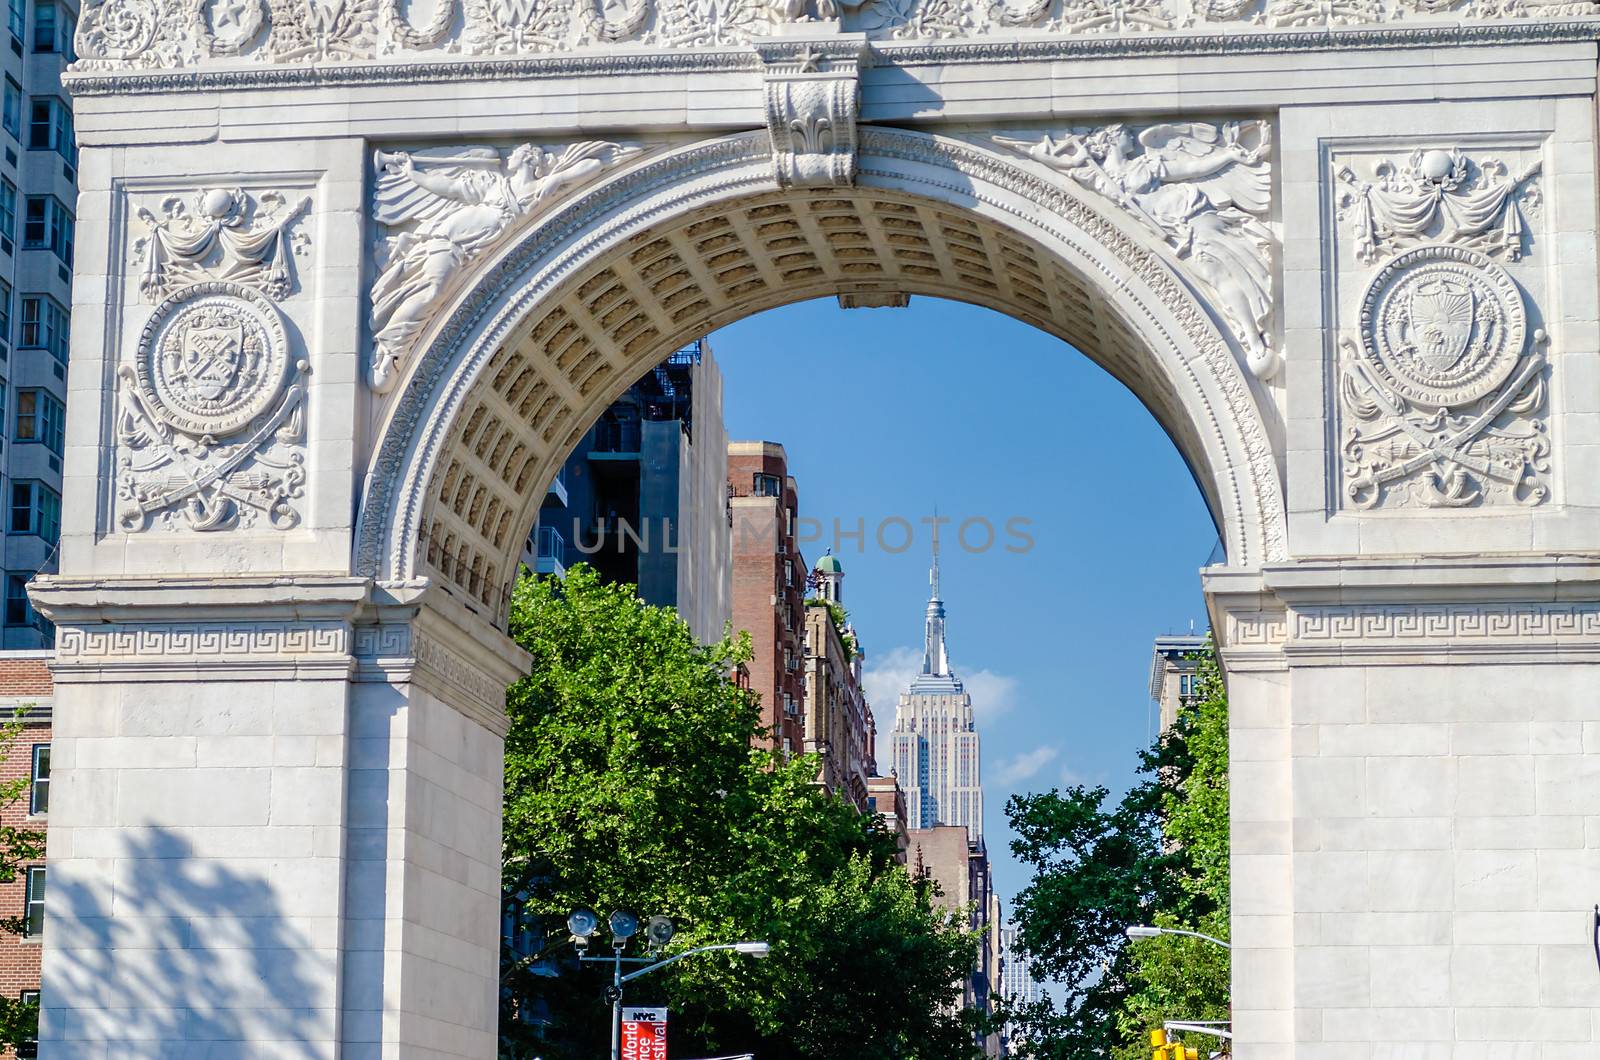 Washington Square Arch and the Empire State Building in the dist by marcorubino